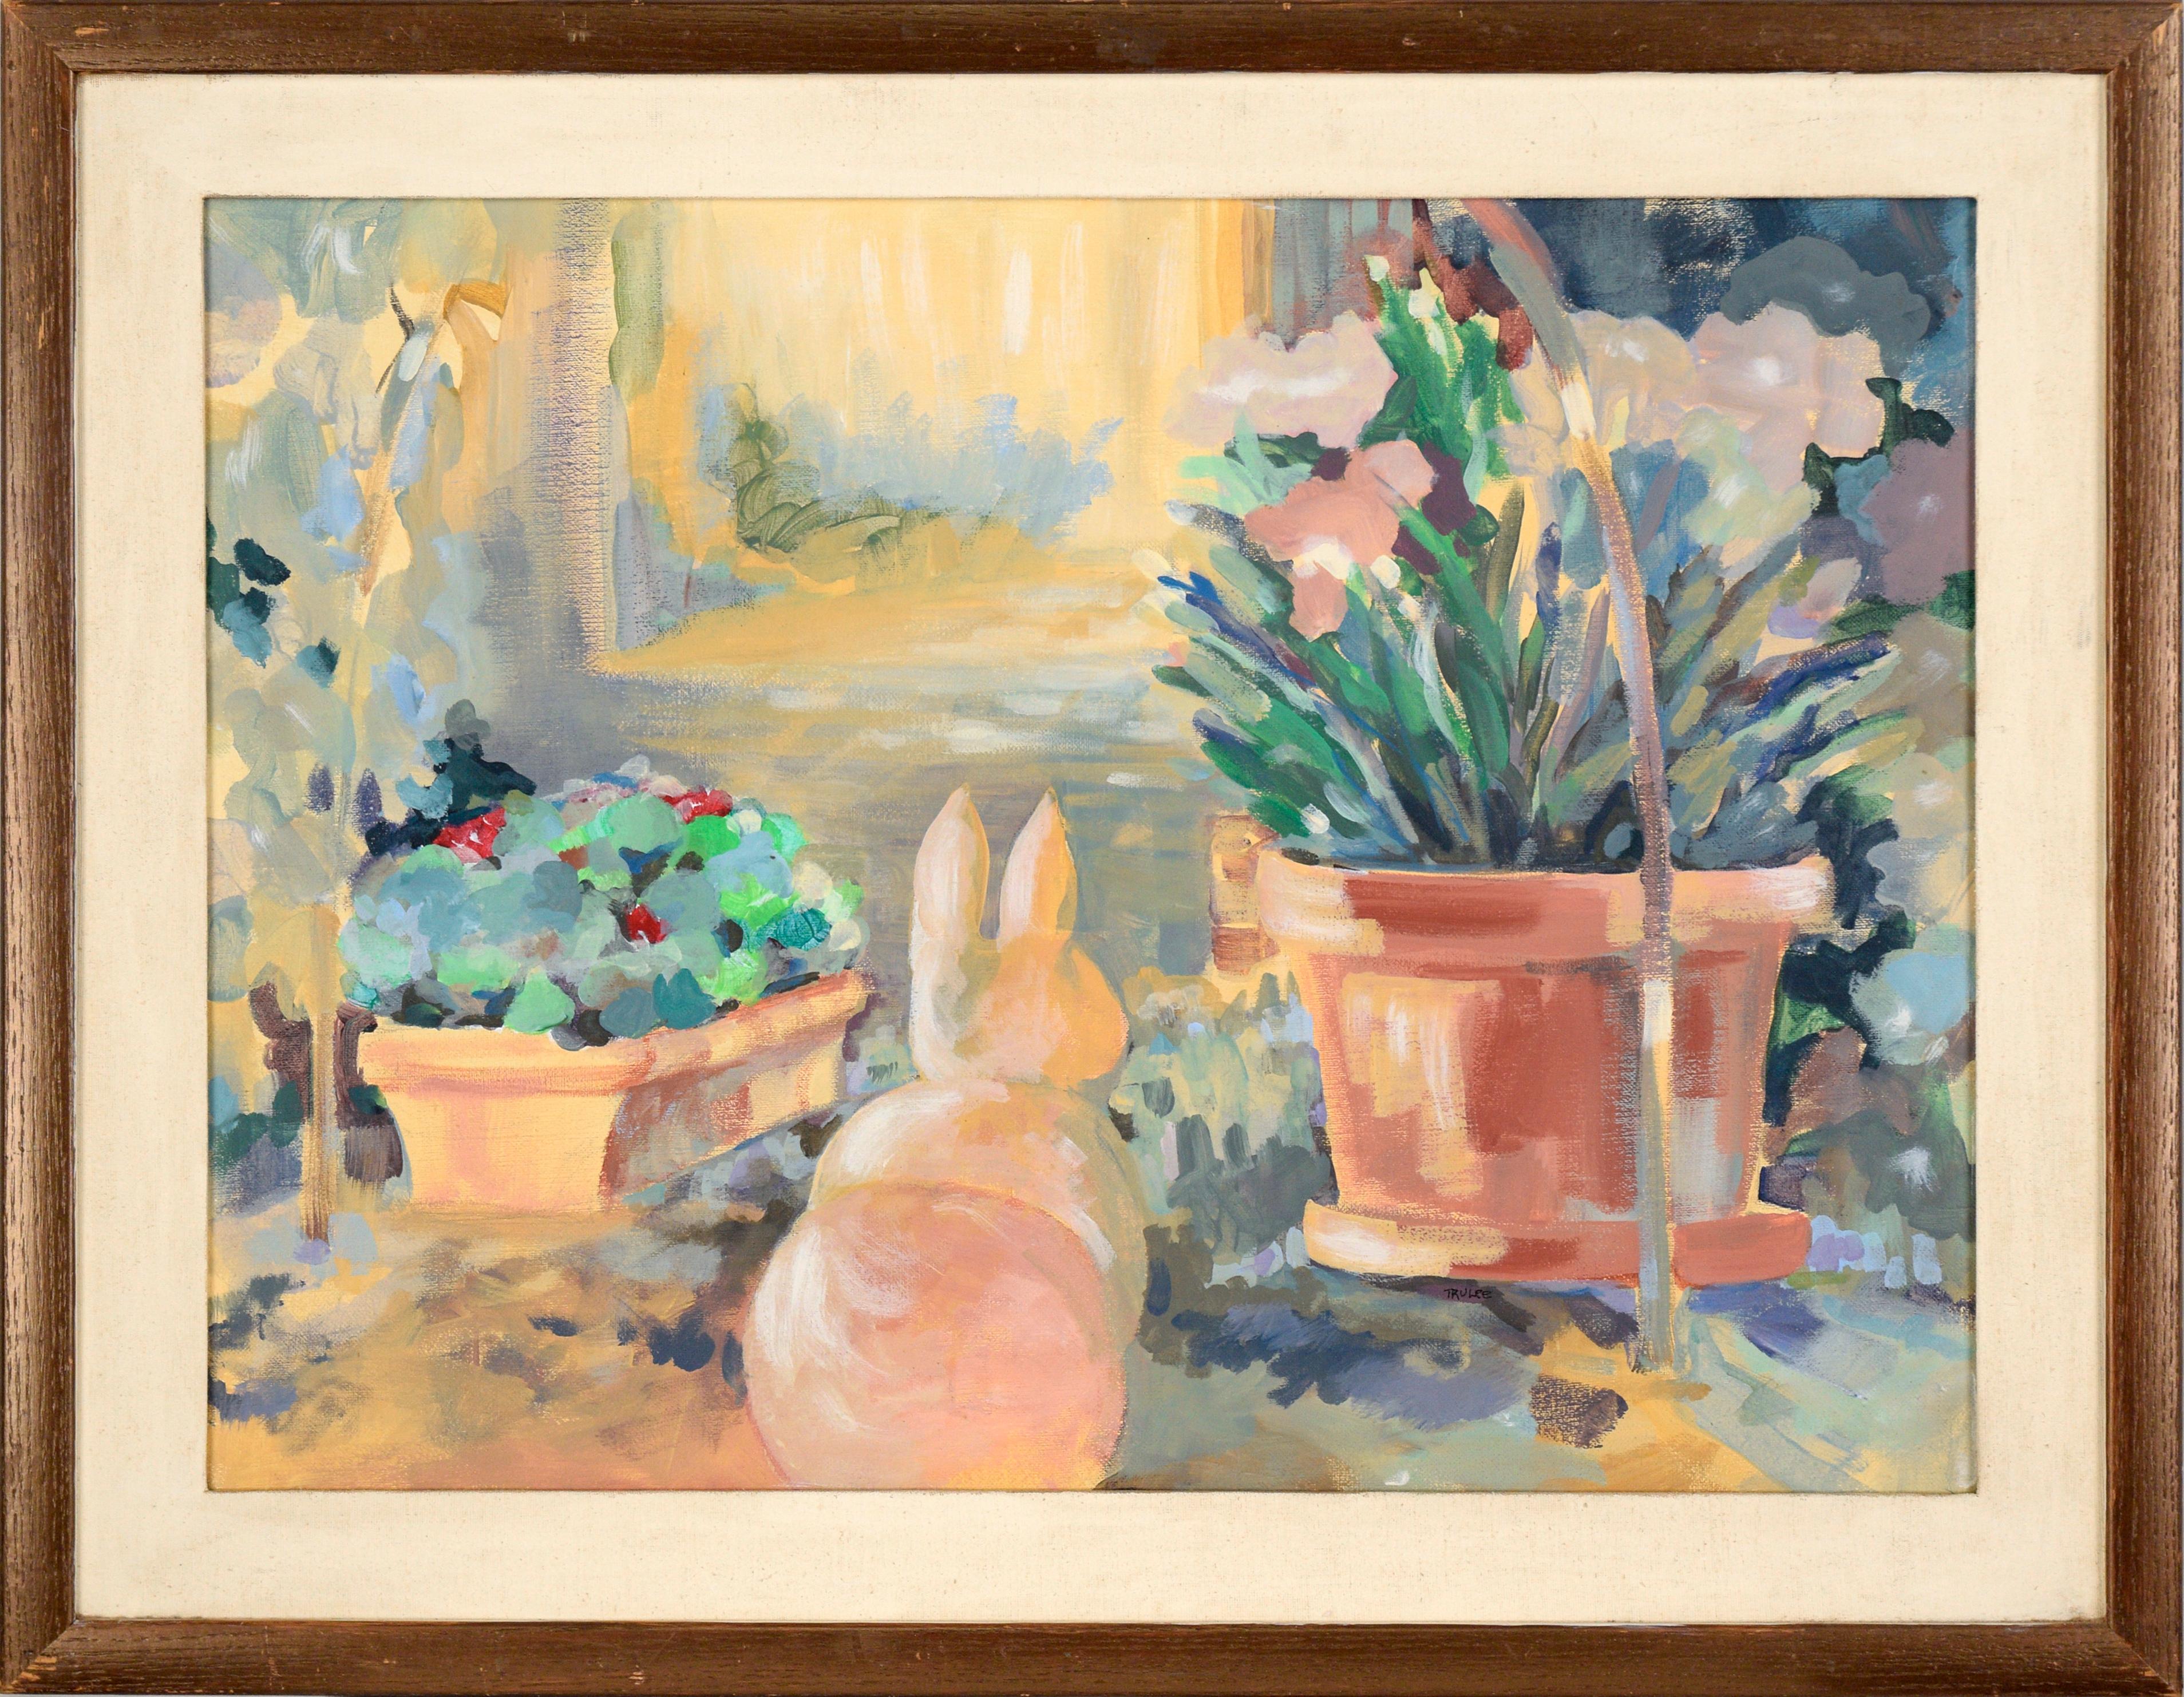 Rabbit Sculpture in the Garden - Acrylic on Canvas